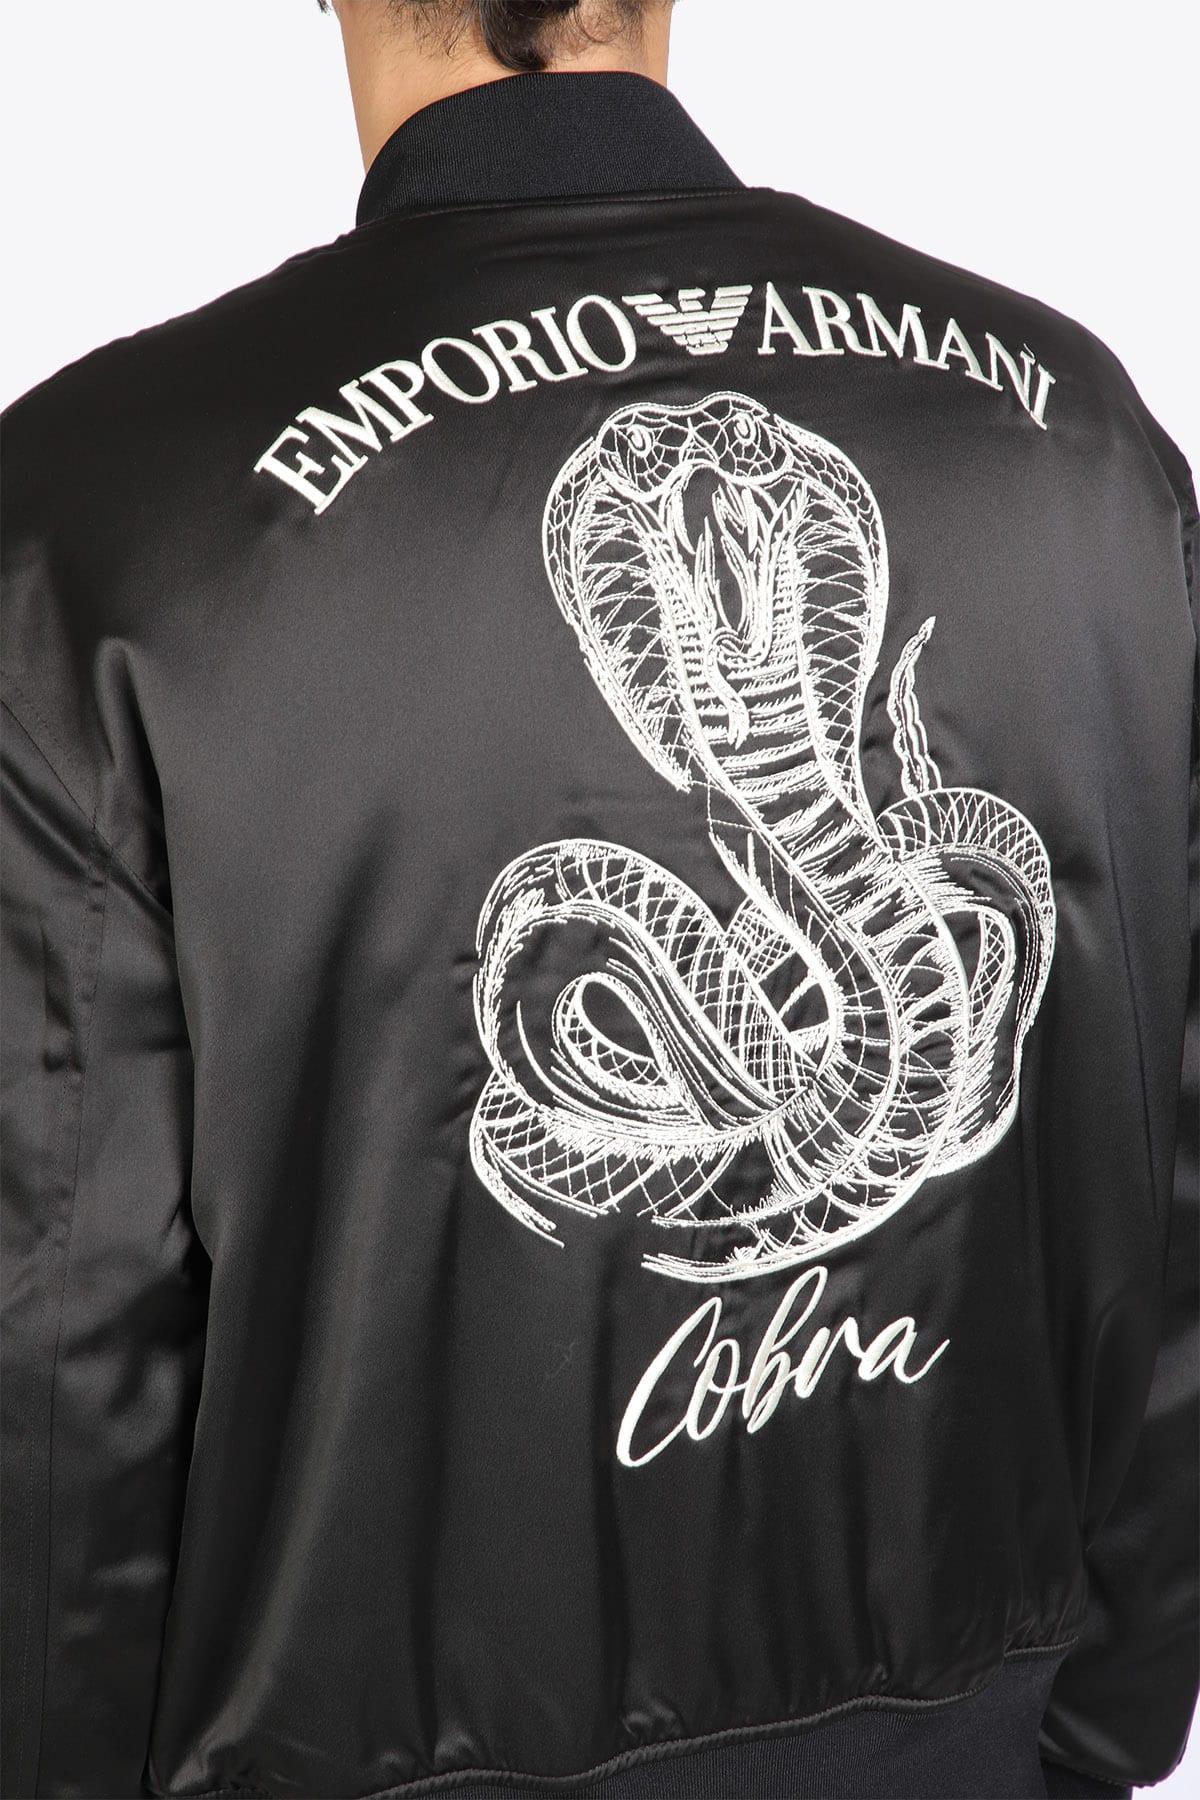 Emporio Armani Men's embossed-monogram Zipped Bomber Jacket - Black - Casual Jackets